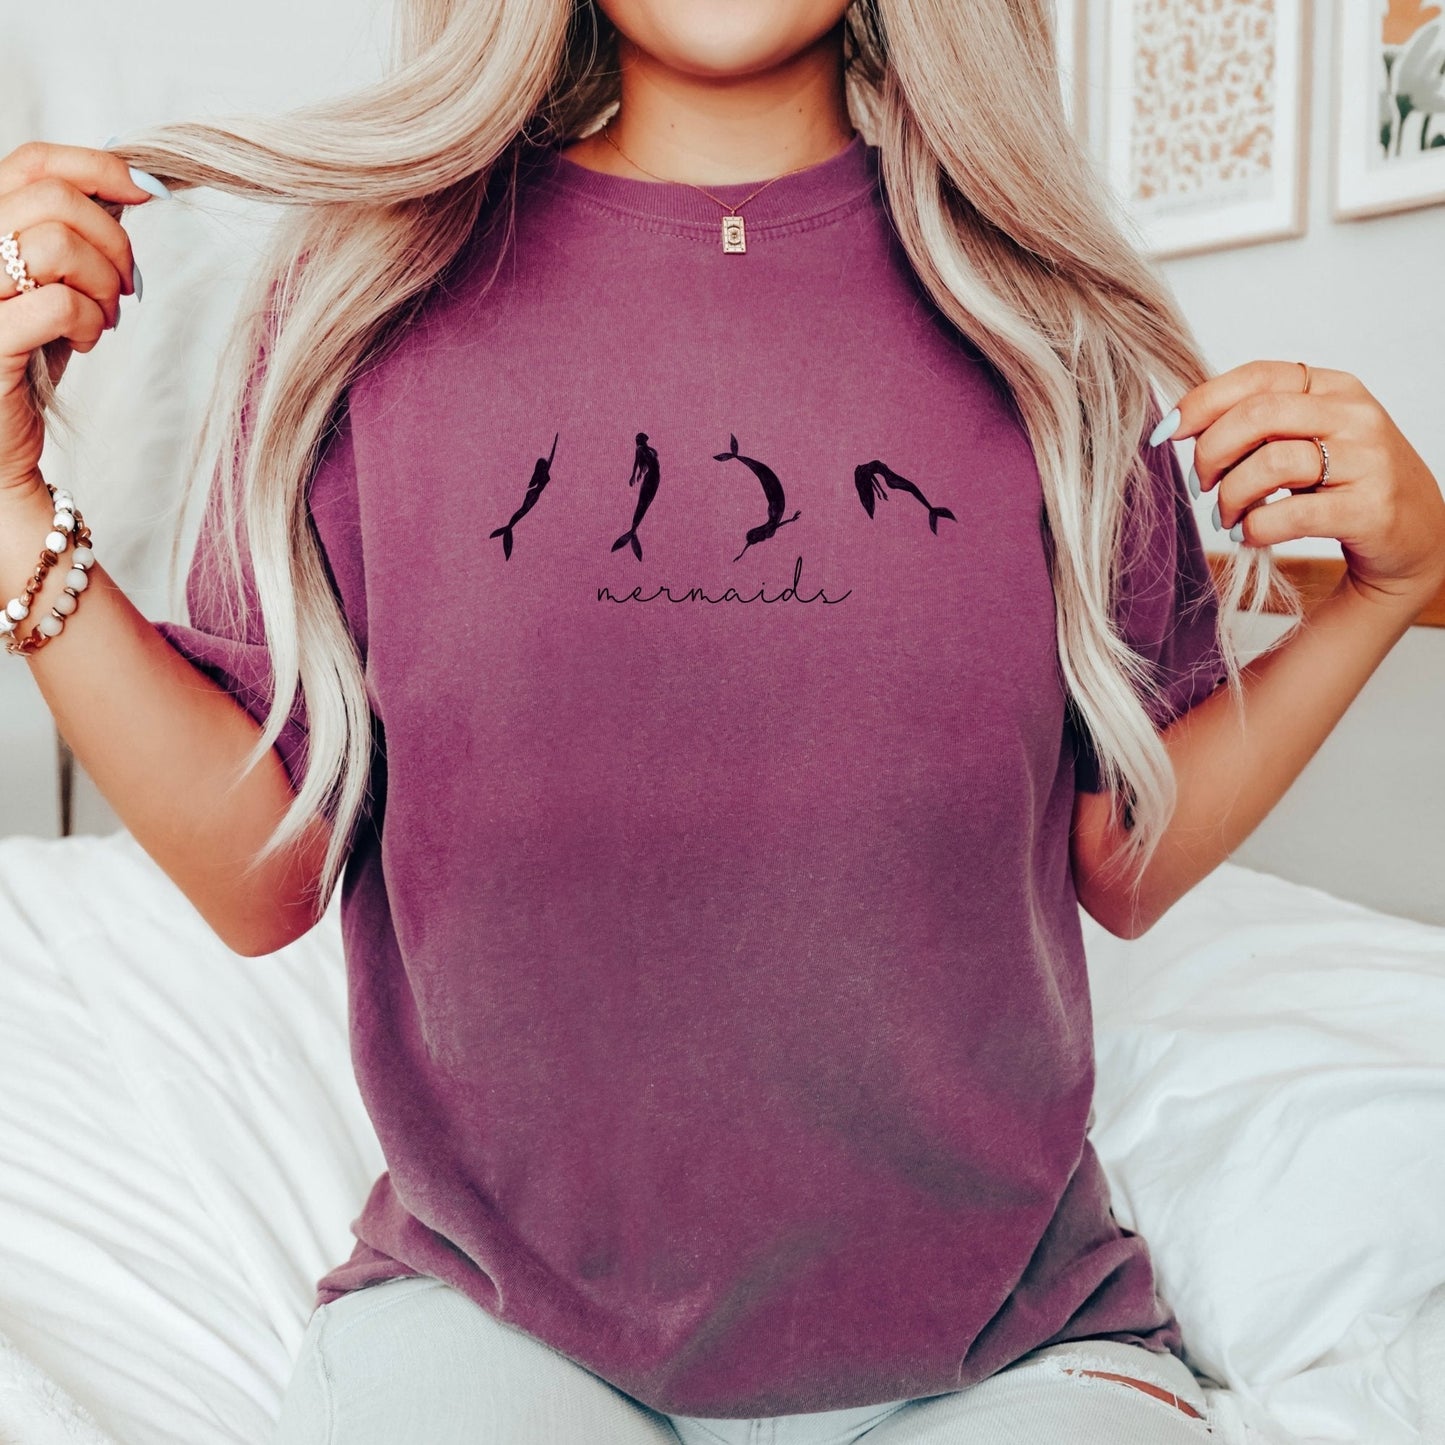 Mermaids T-Shirt, Funny Shirt, Ocean Shirt, Top Selling Shirts, Graphic Tee, Mermaidcore Shirt, Unisex Tee - AFADesignsCo